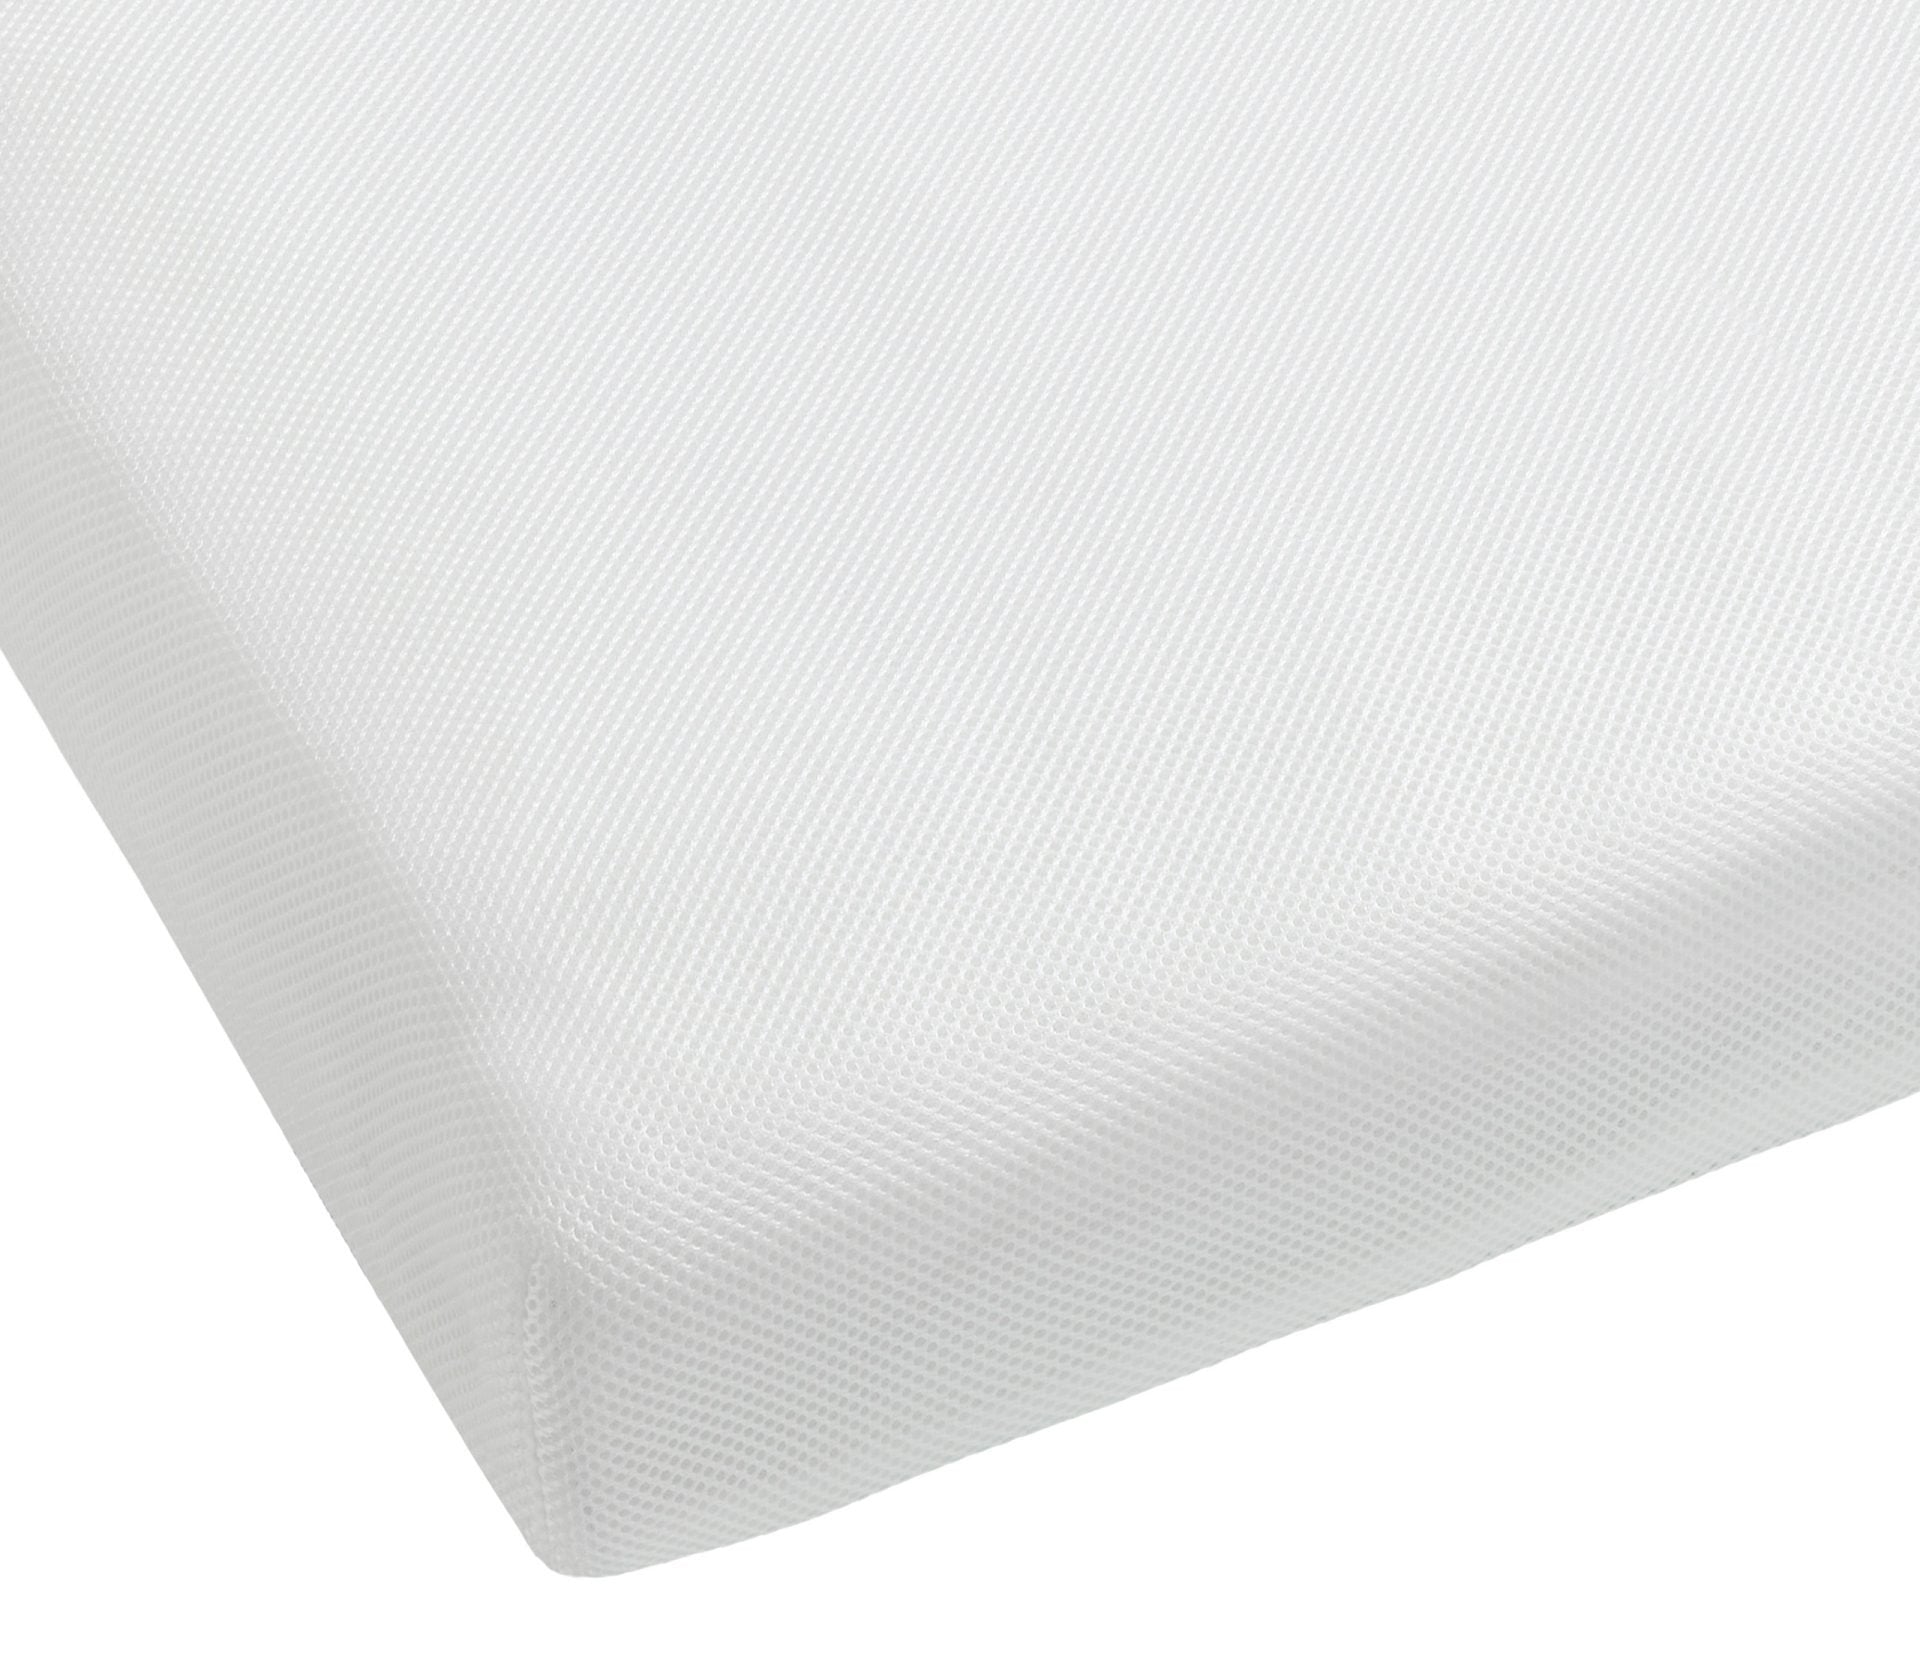 View Babymore Premium Core Pocket Sprung Cot Bed Mattress 140 x 70 x 10 CM information